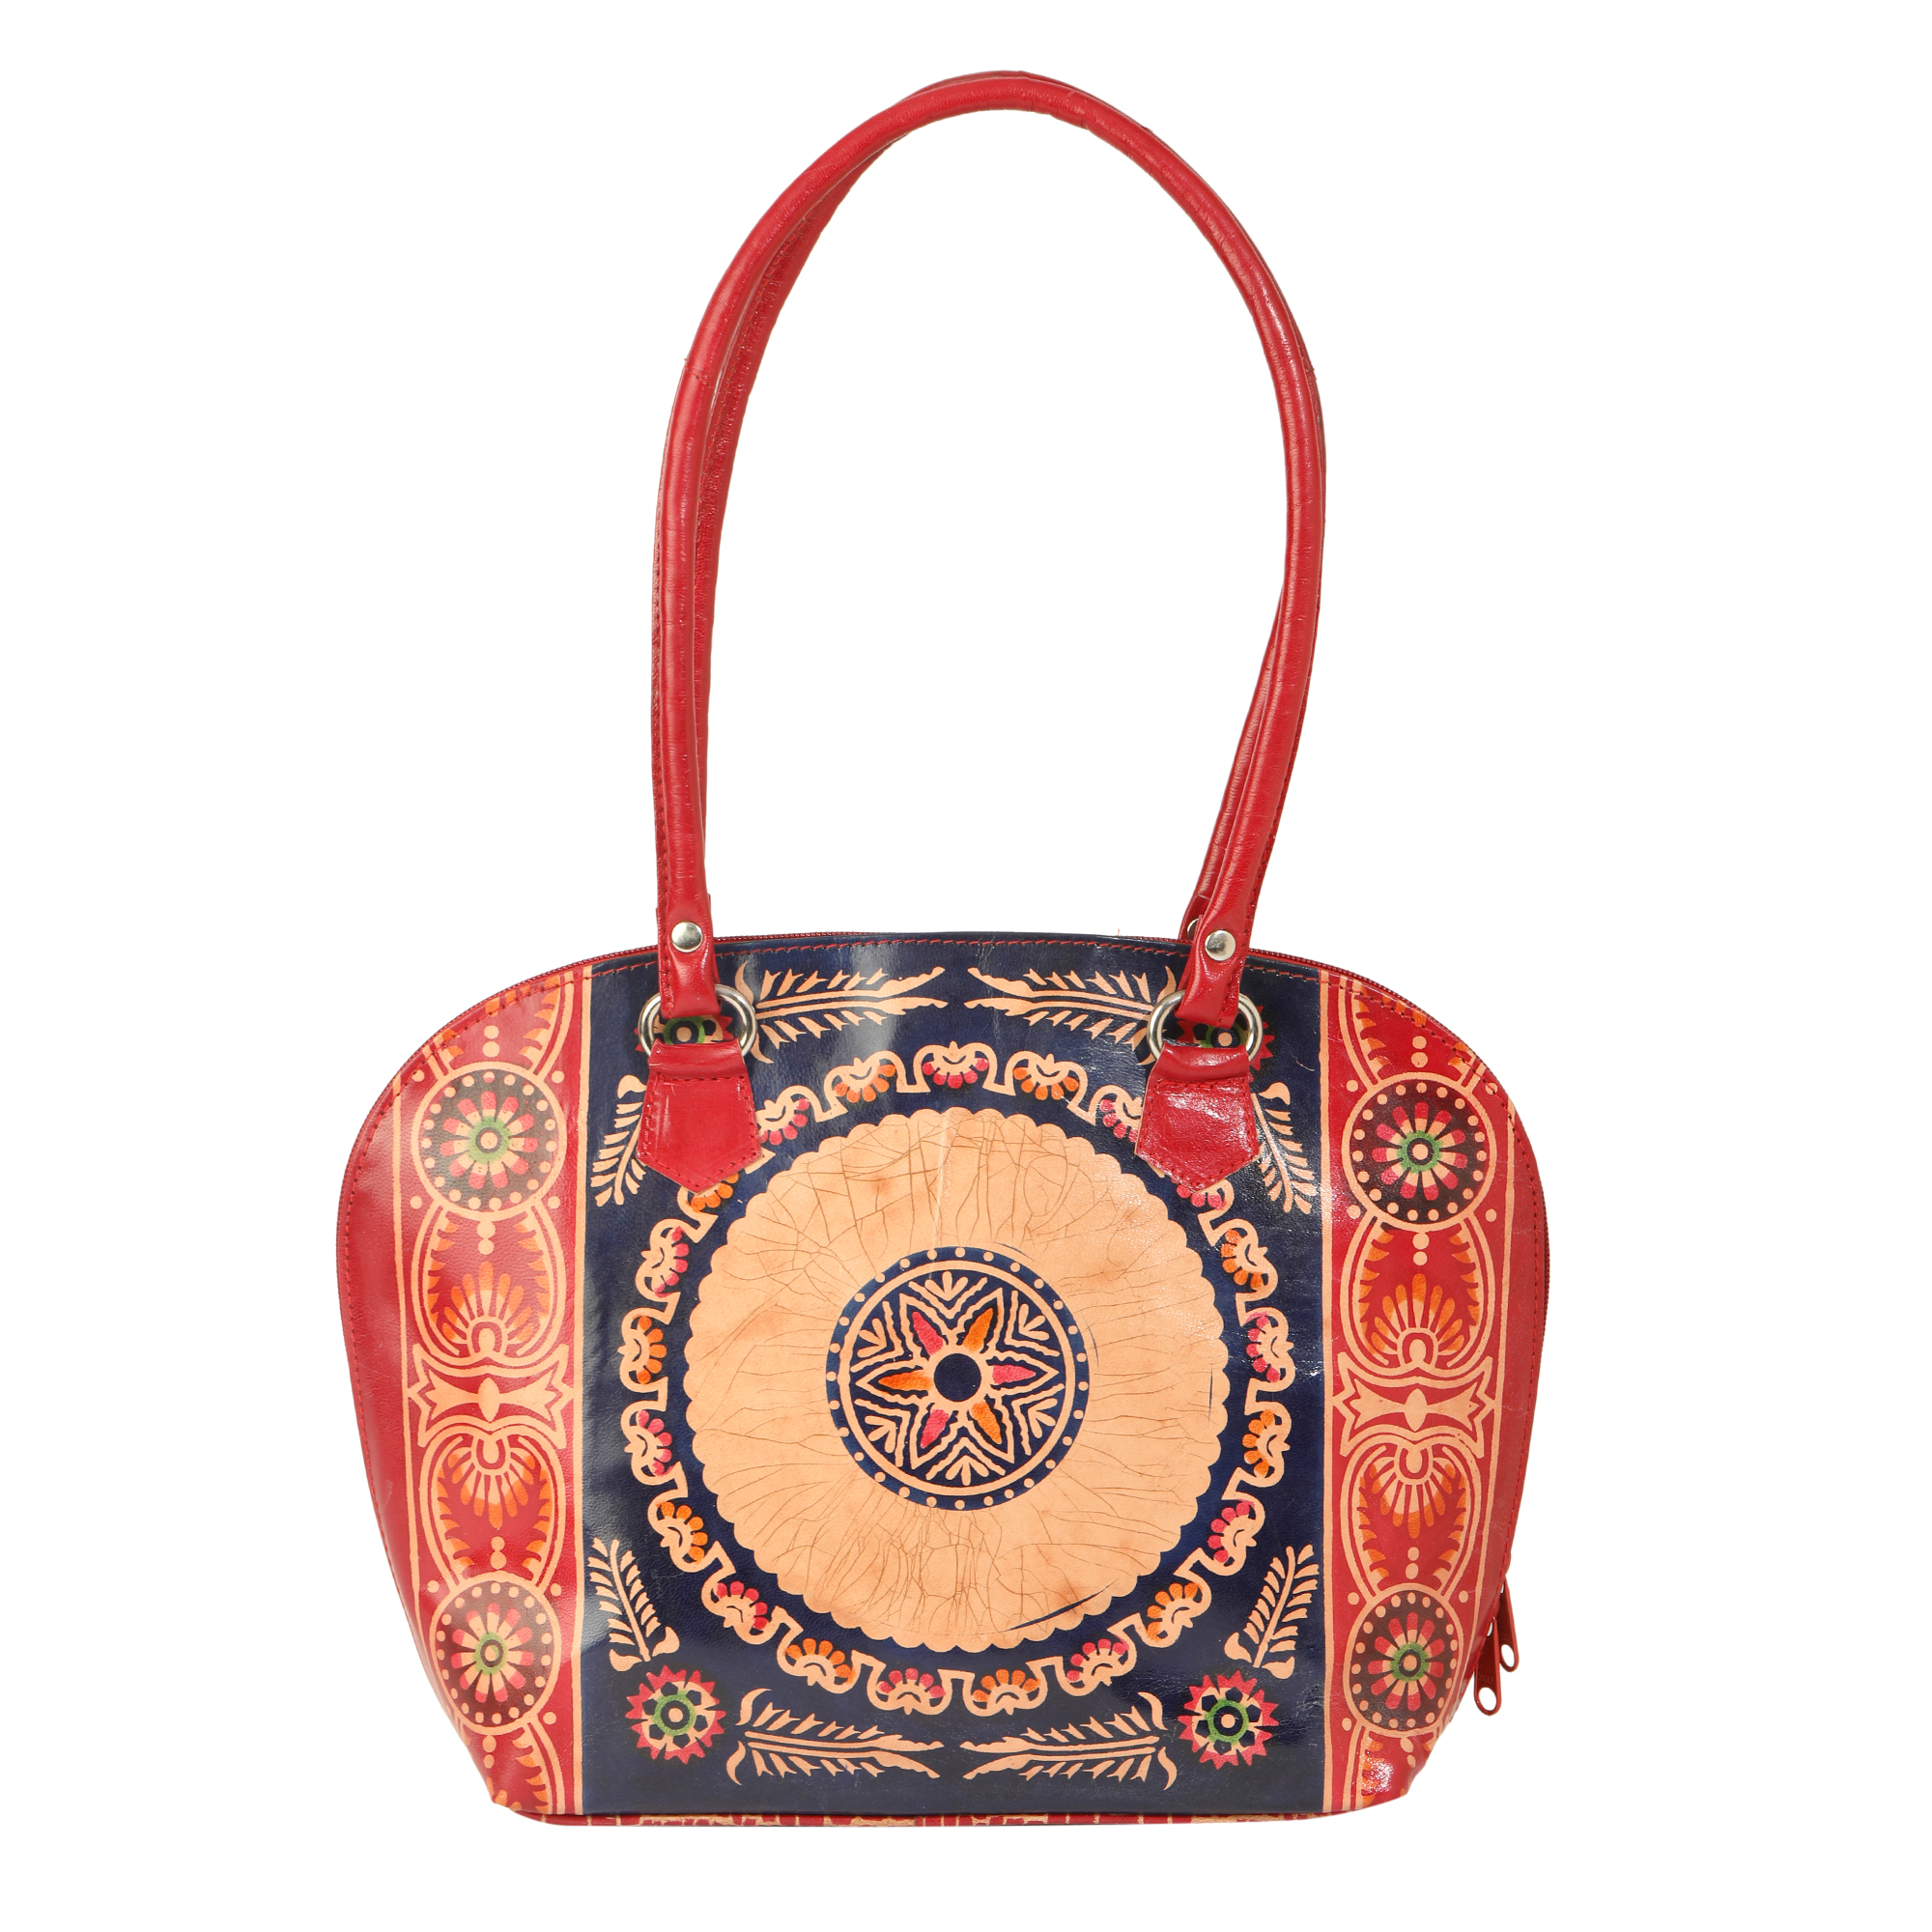 Shopping Bags Handled Leather Shantiniketan Ethnic Printed Hand Bag